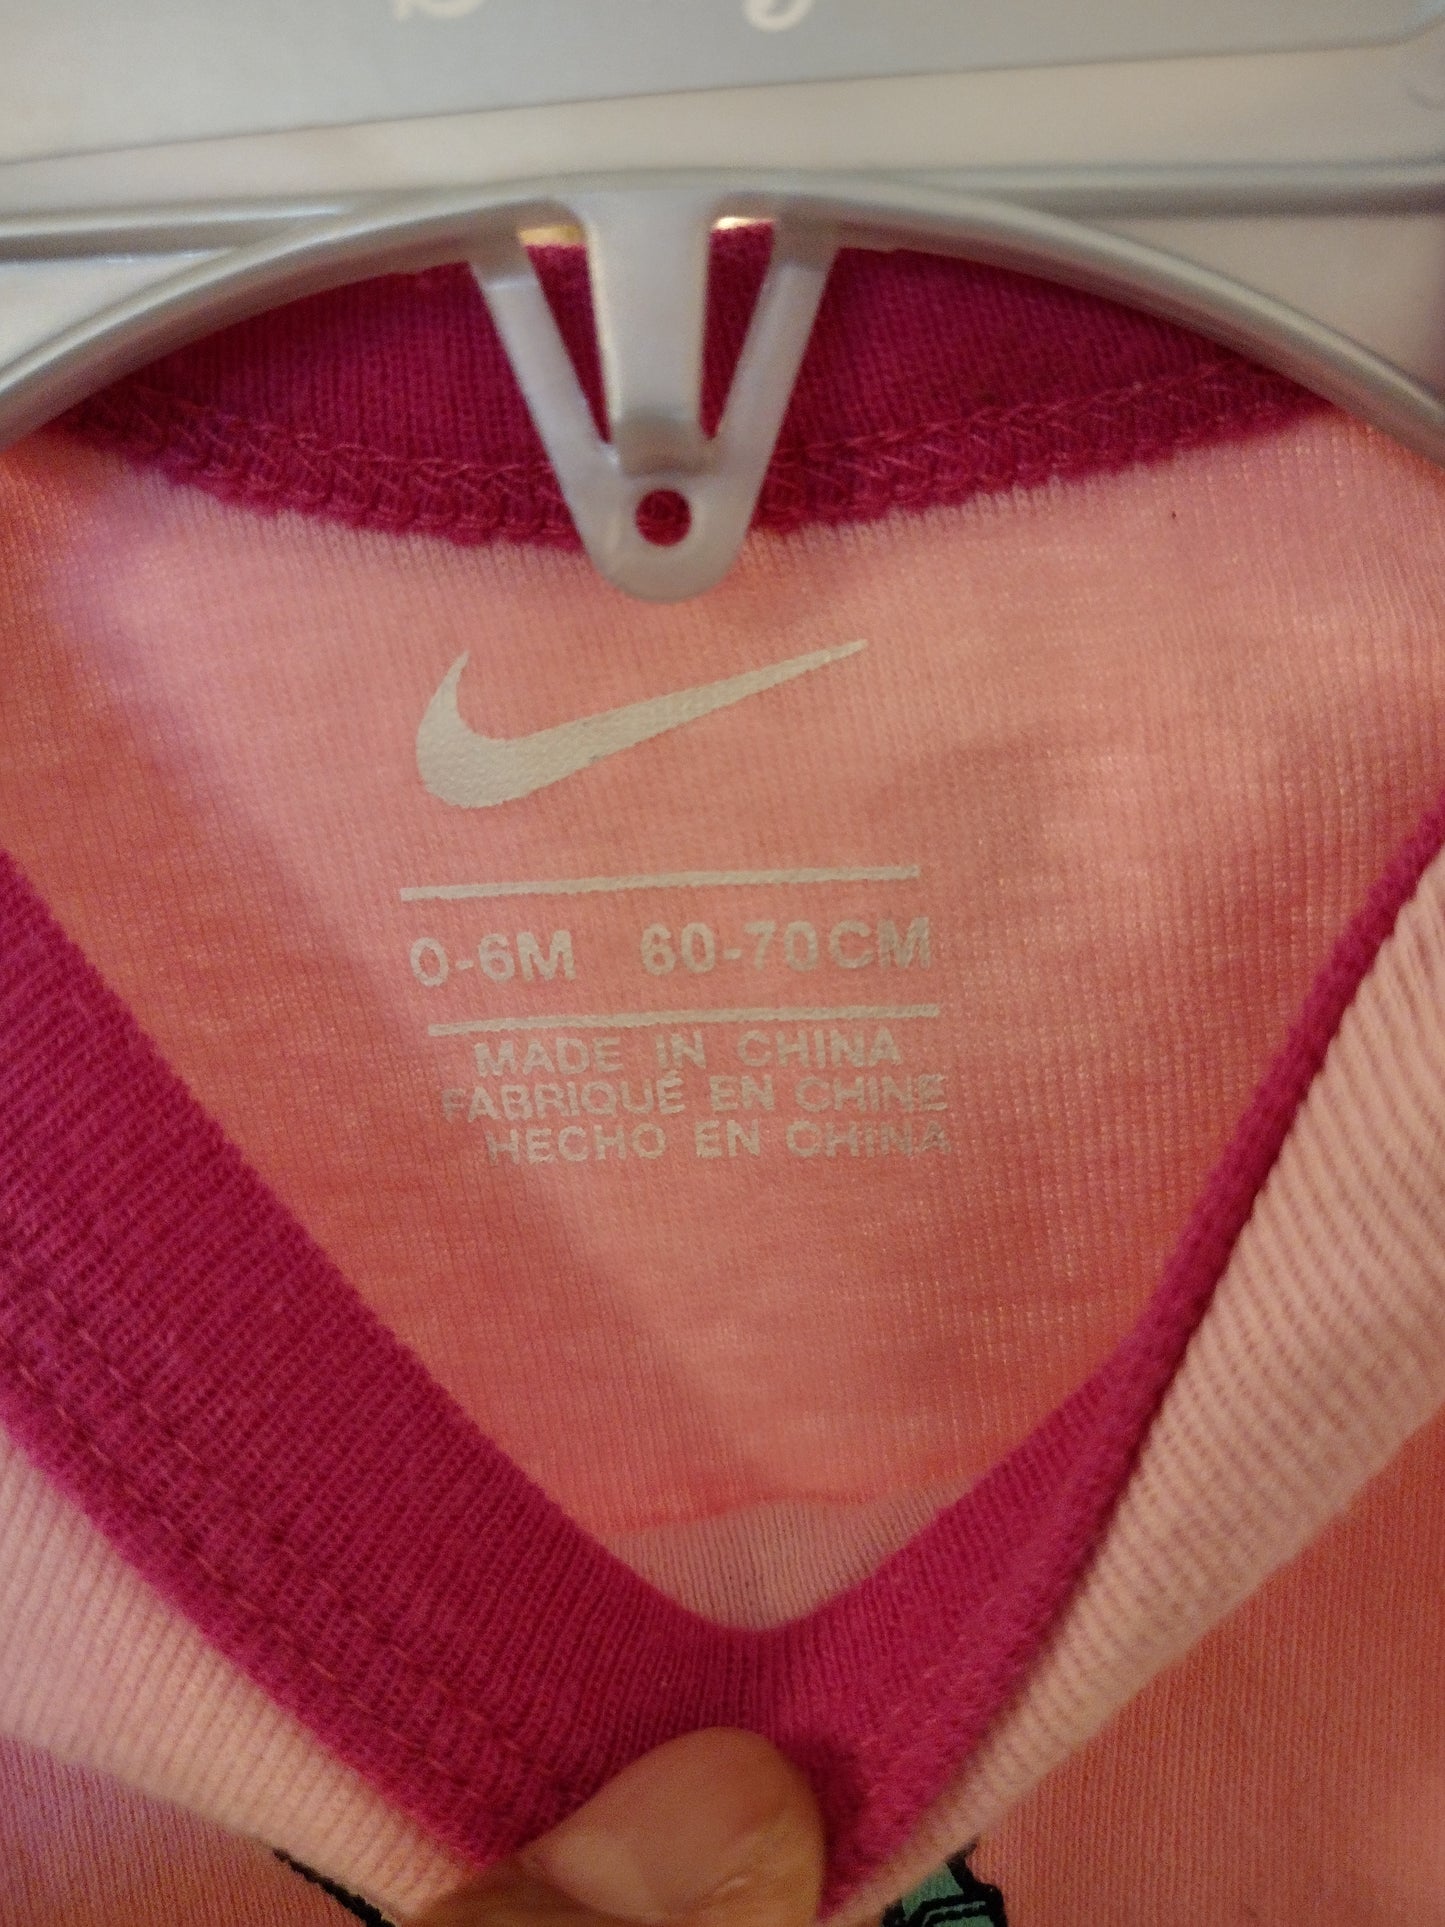 Nike Baby Girls Bodysuit - 0/6 months